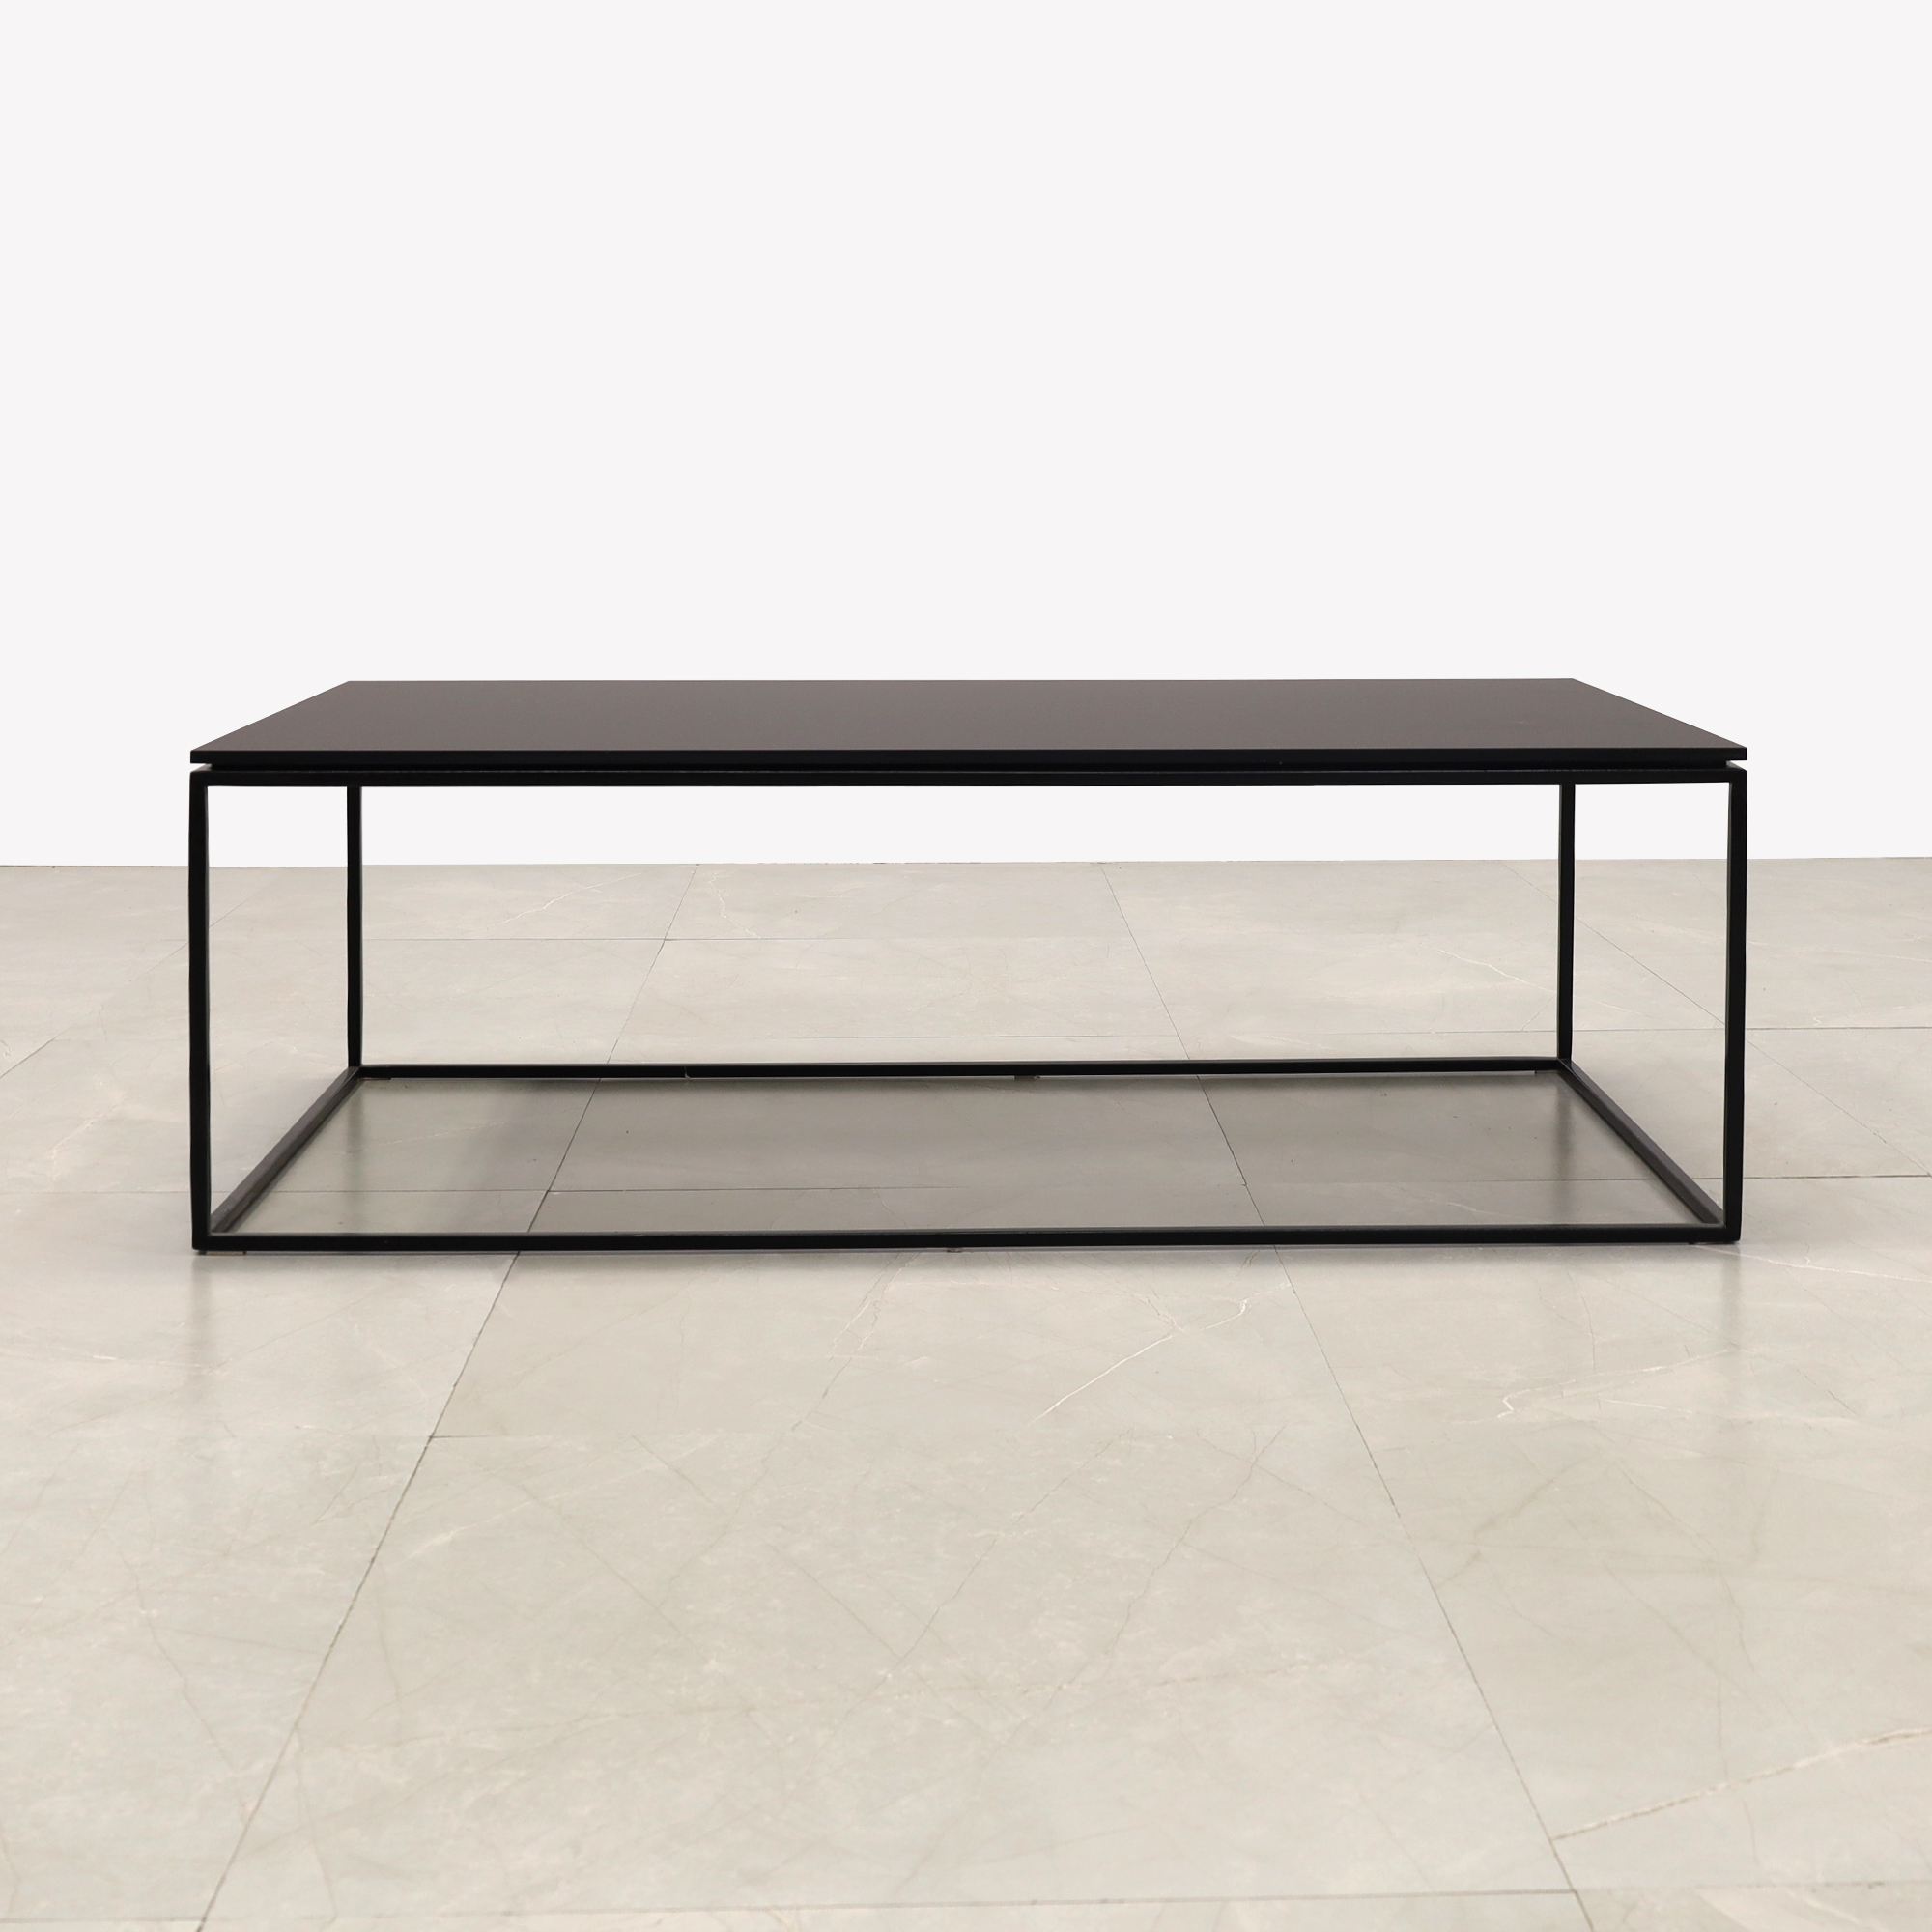 Aspen Rectangular Lobby Table in black OPAK engineered stone top and black metal frame shown here.